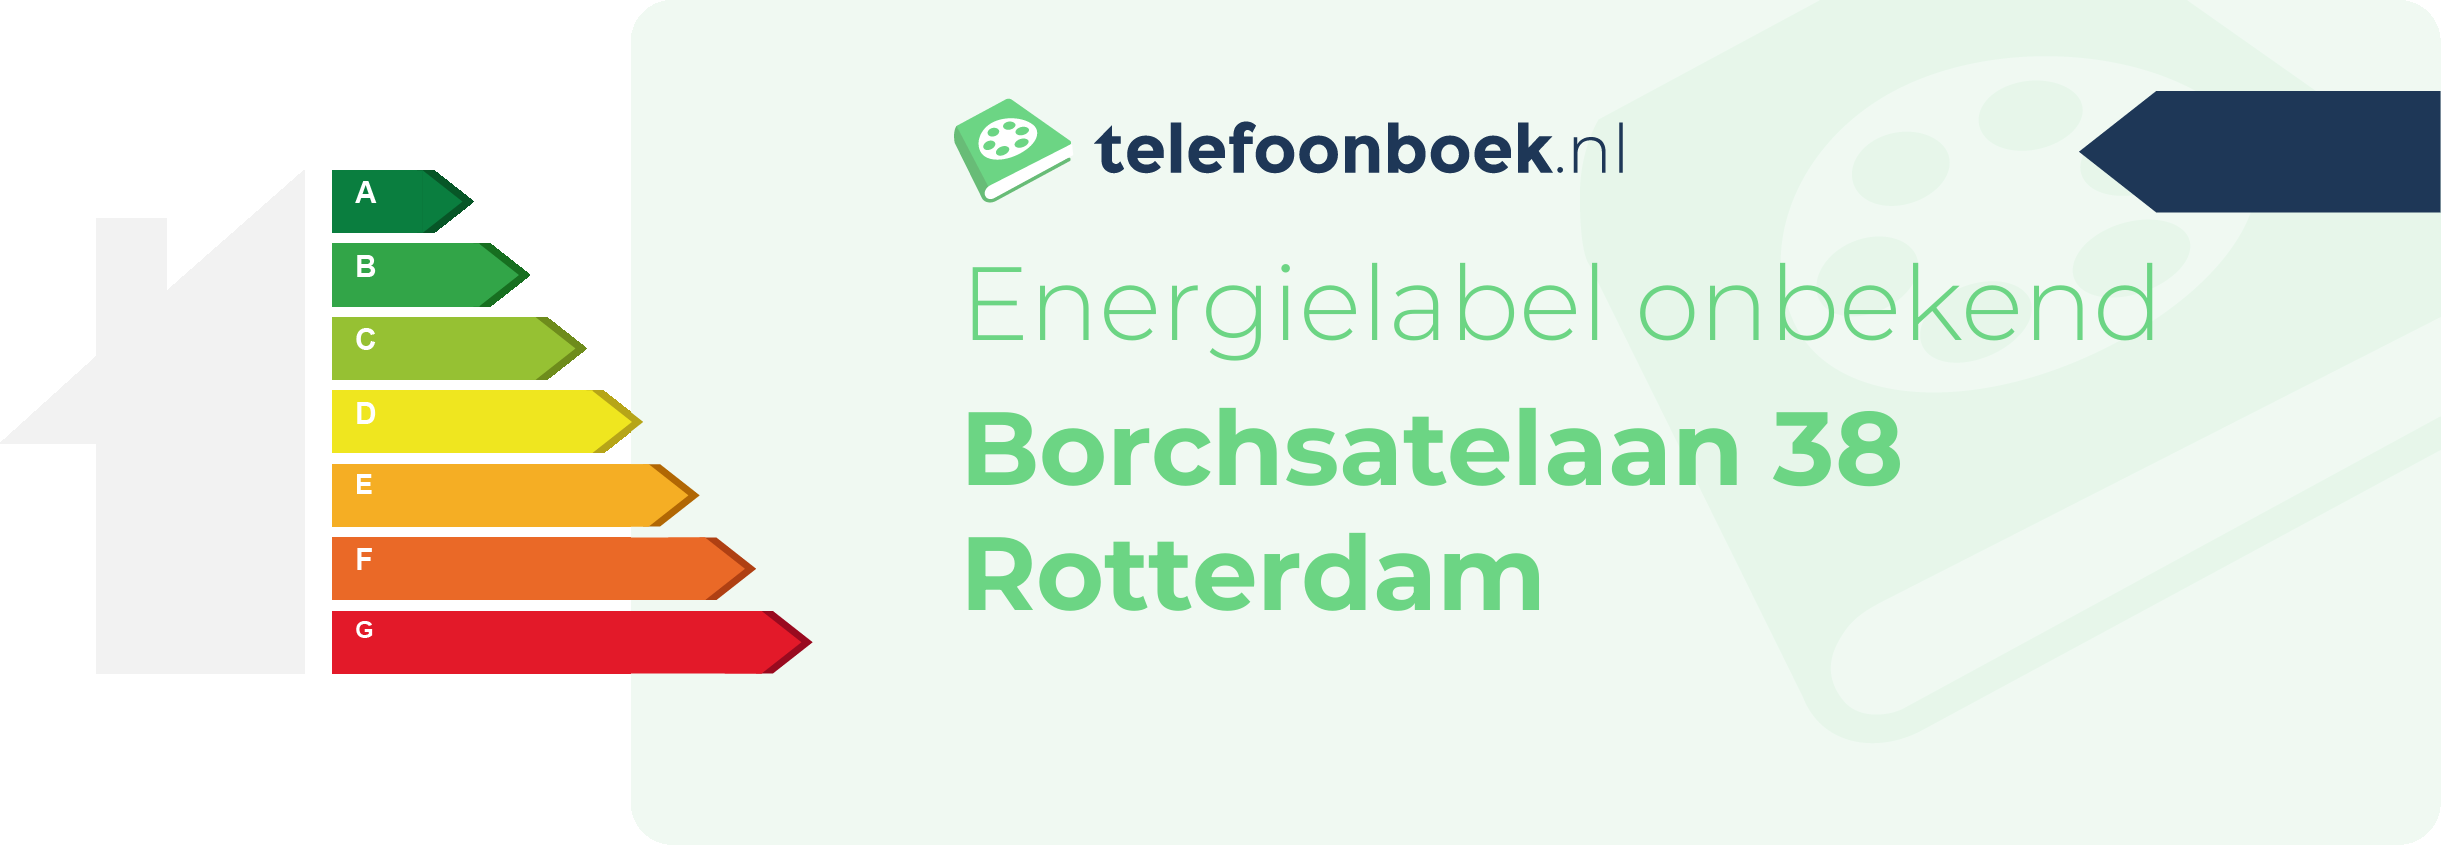 Energielabel Borchsatelaan 38 Rotterdam